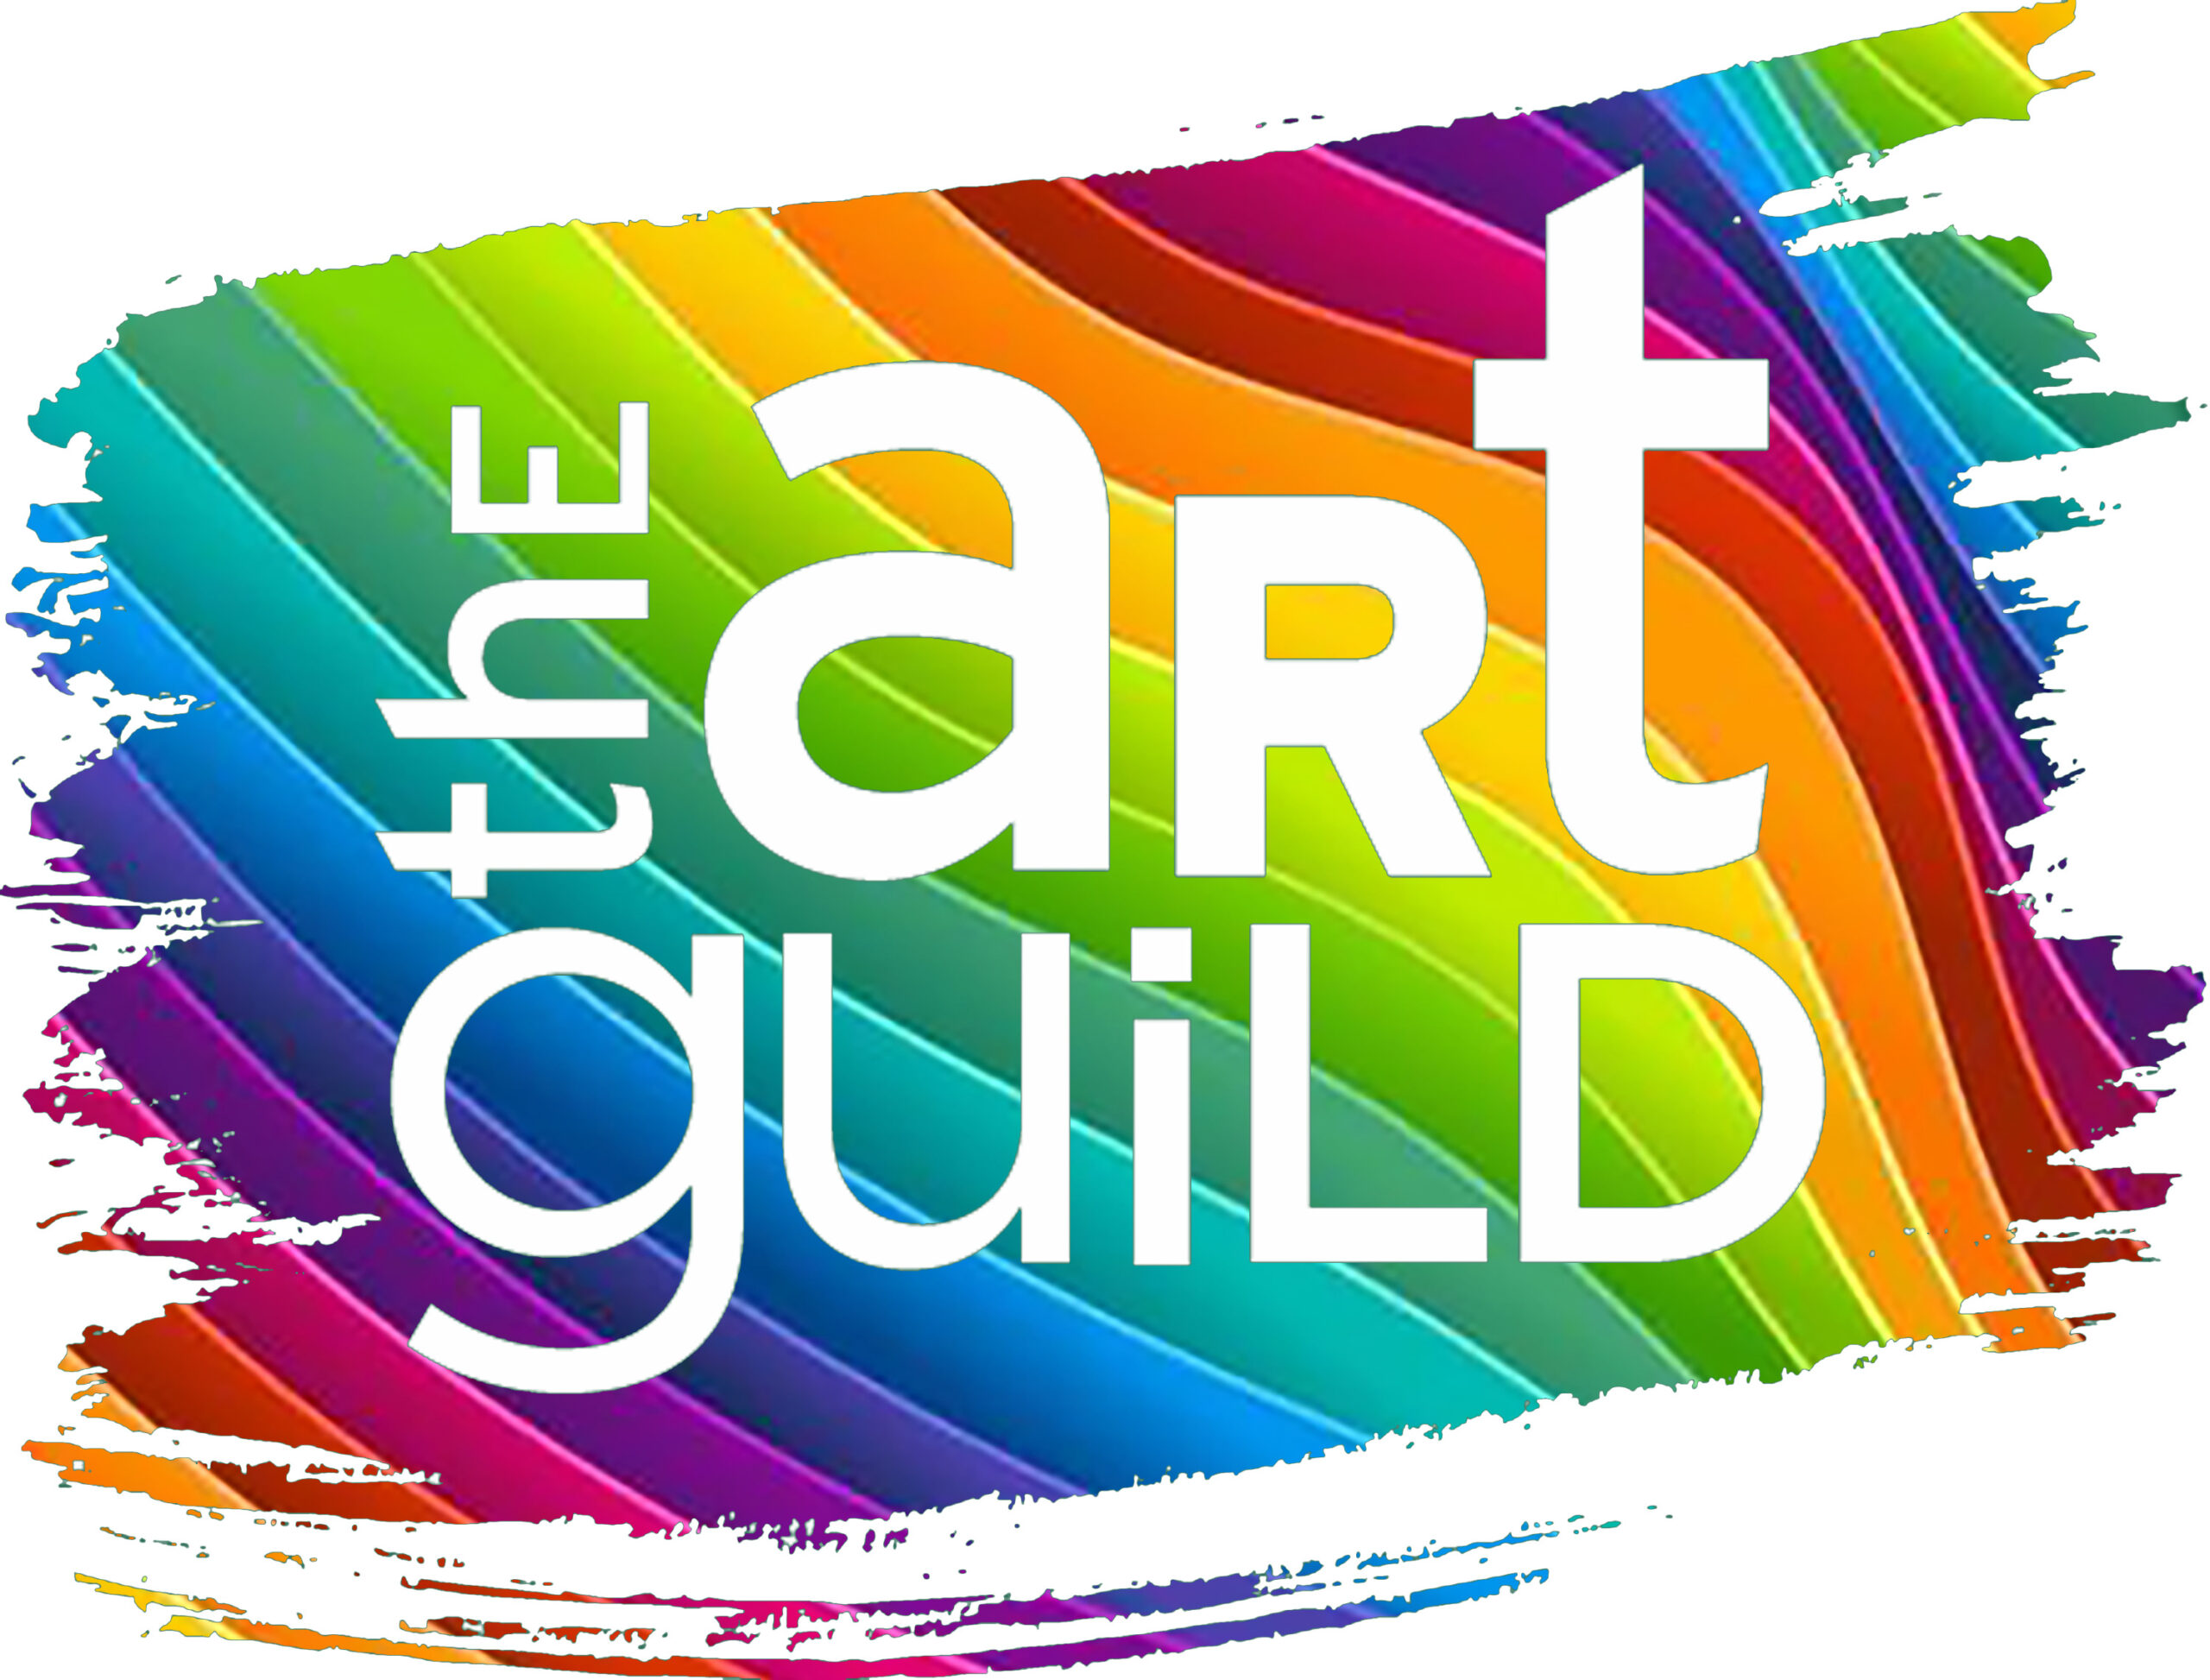 The Art Guild of Port Washington, Inc.